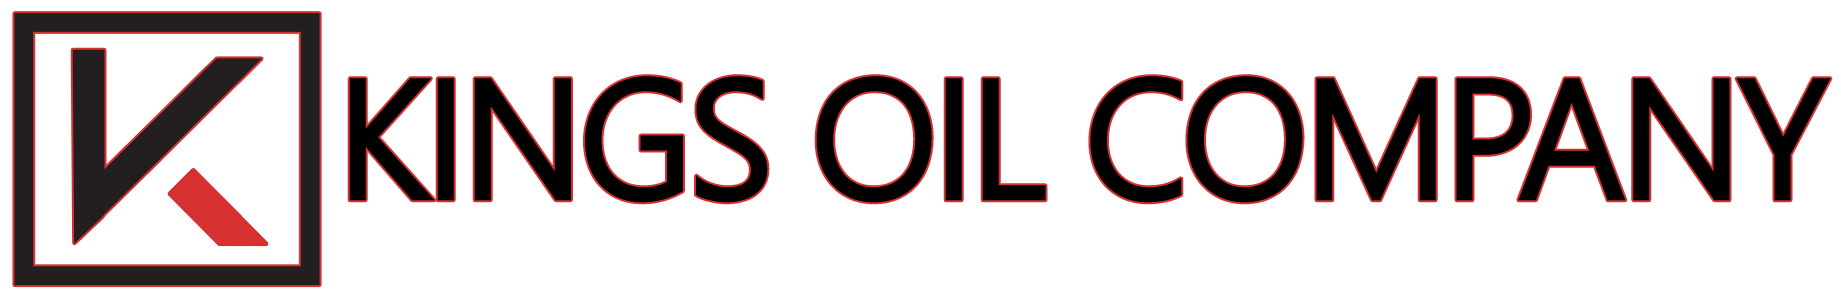 kings oil company logo